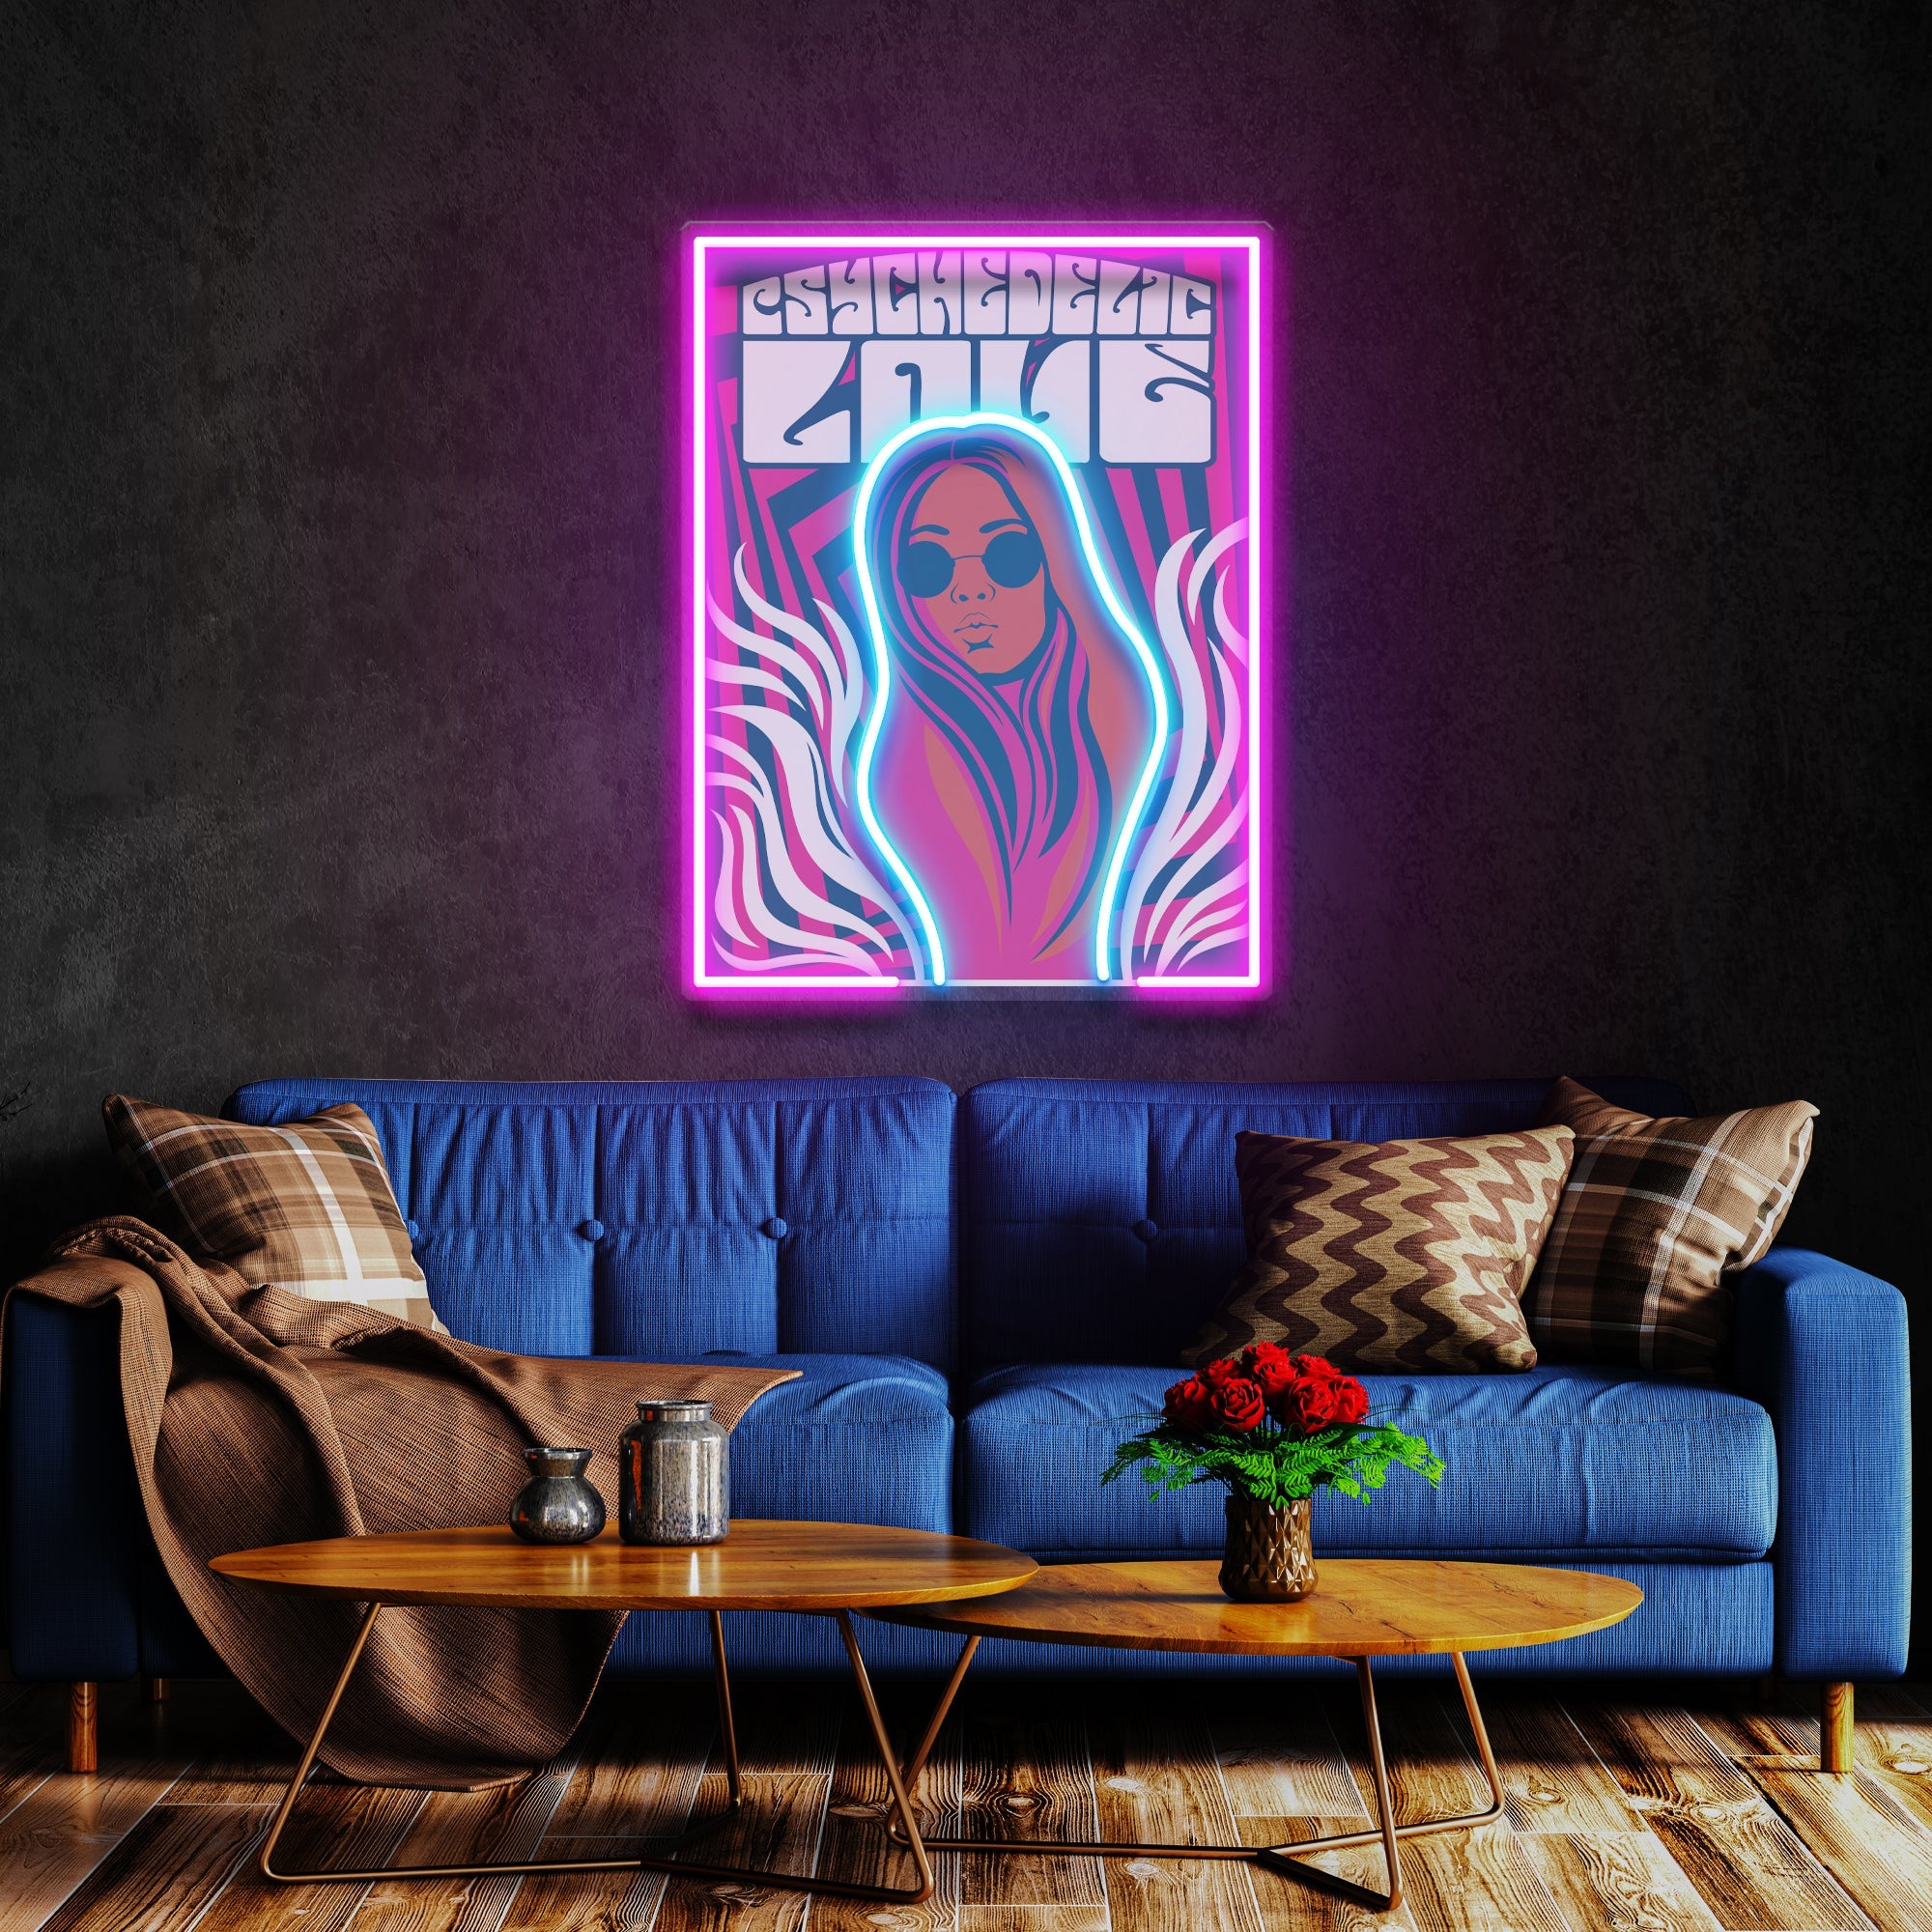 Vintage Hippie Woman Psychedelic Pop Art Led Neon Sign Light - Neonbir